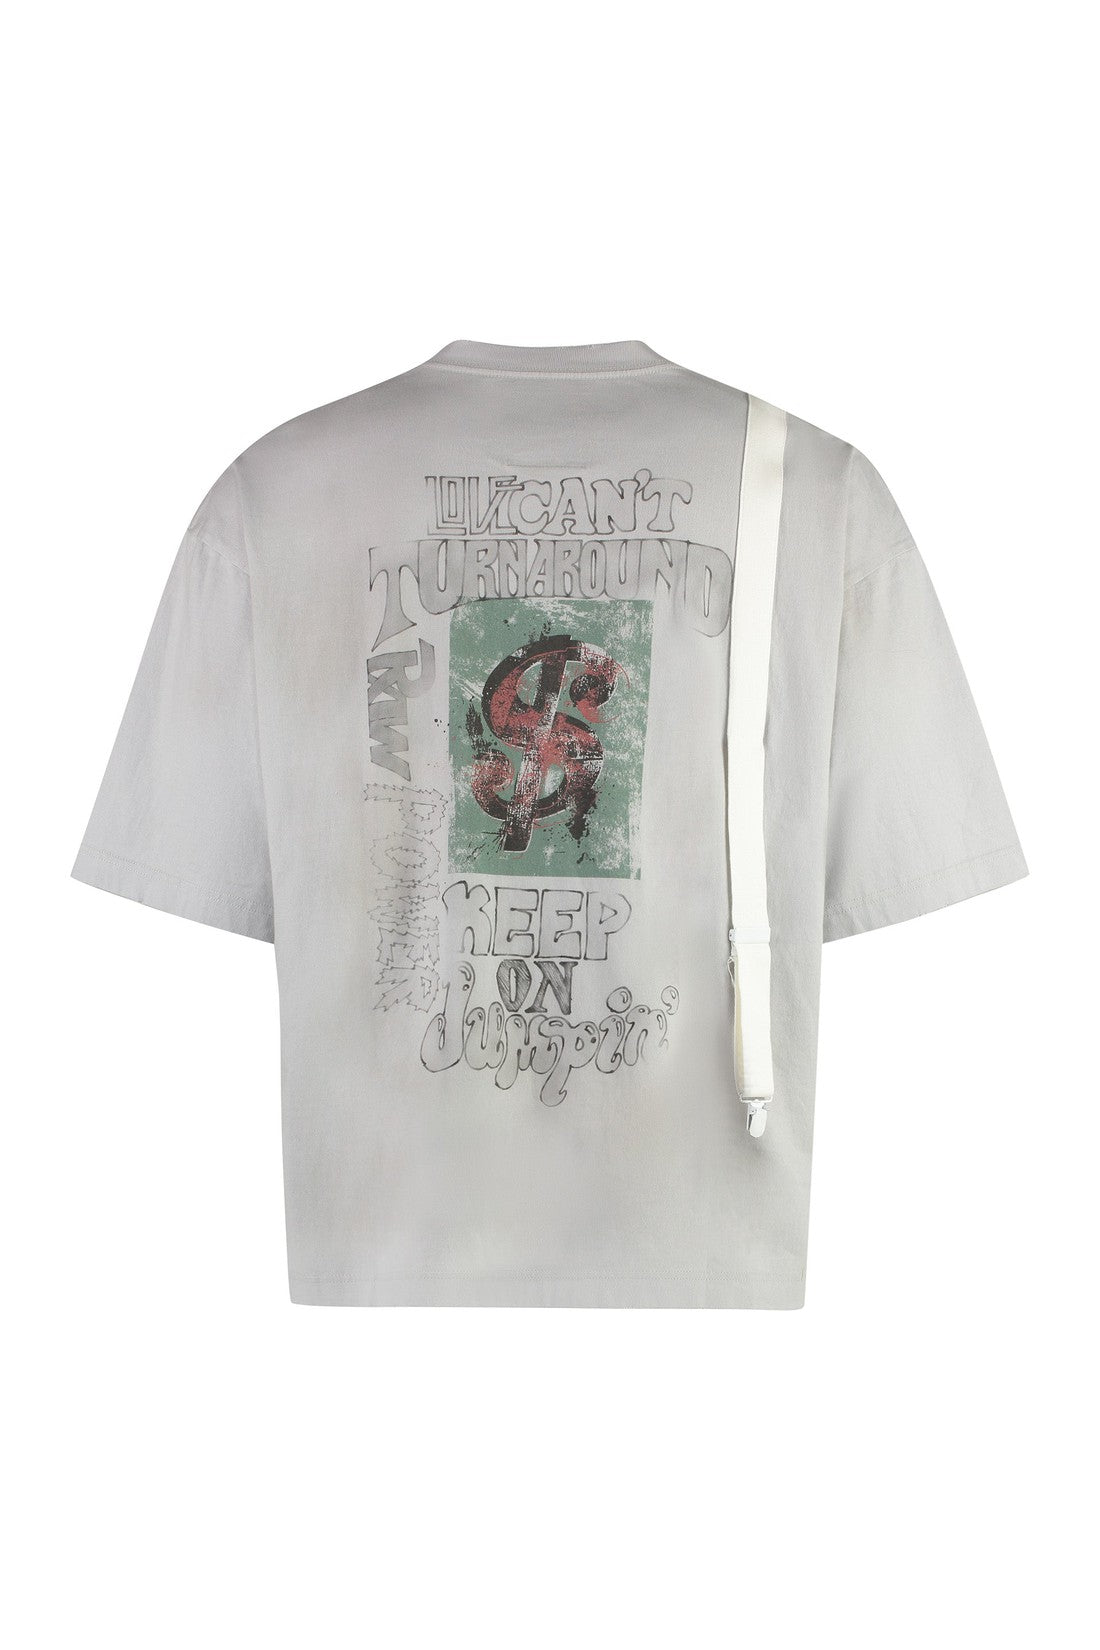 Maison Mihara Yasuhiro-OUTLET-SALE-Printed cotton T-shirt-ARCHIVIST